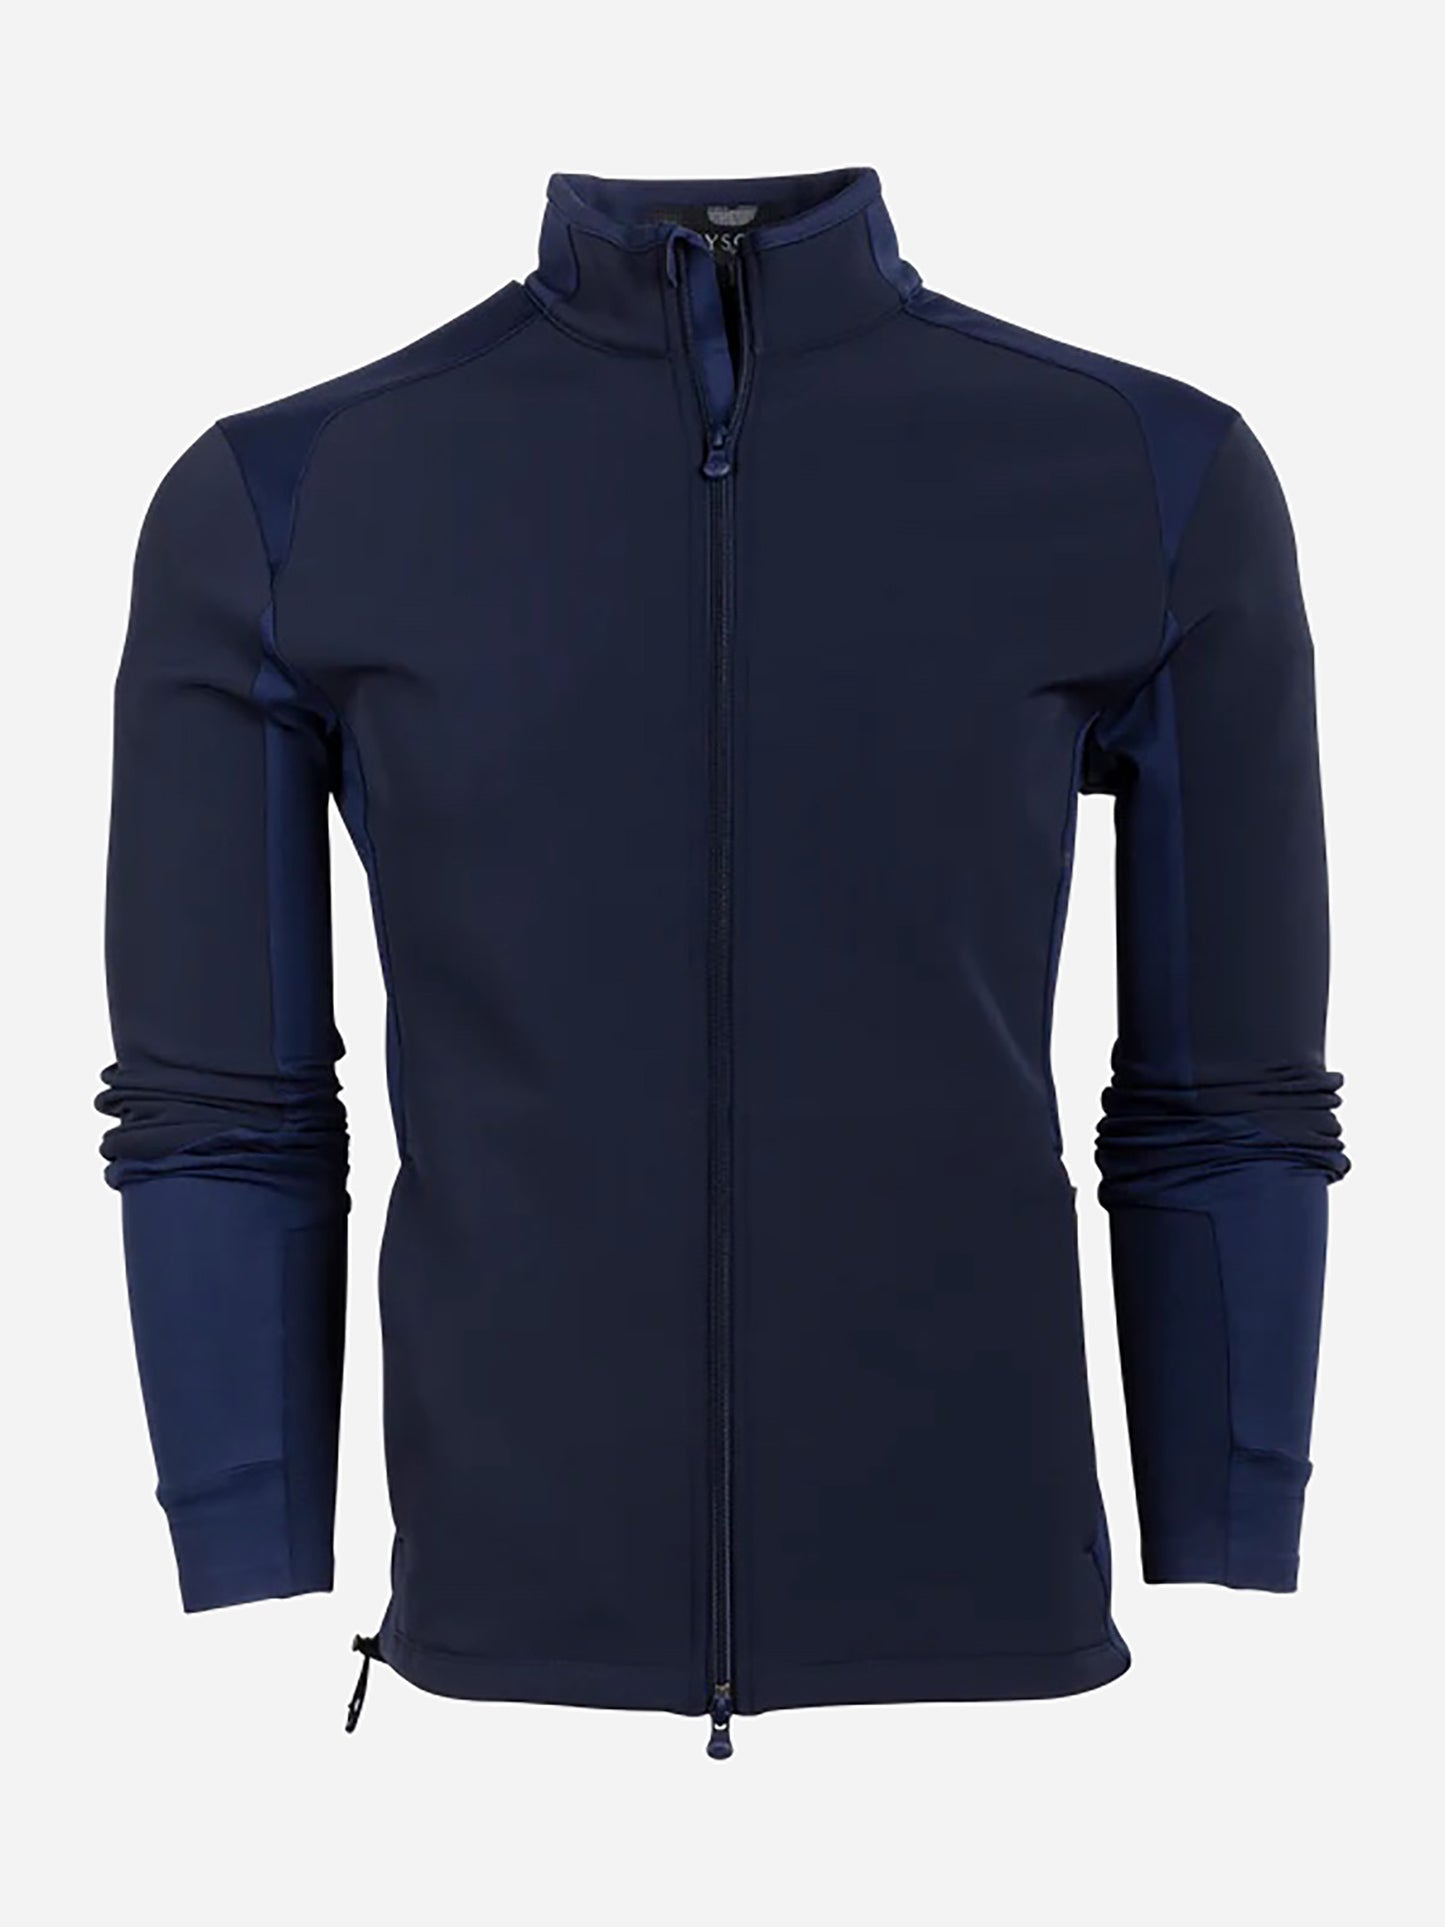 Greyson Men's Sequoia Sport Jacket